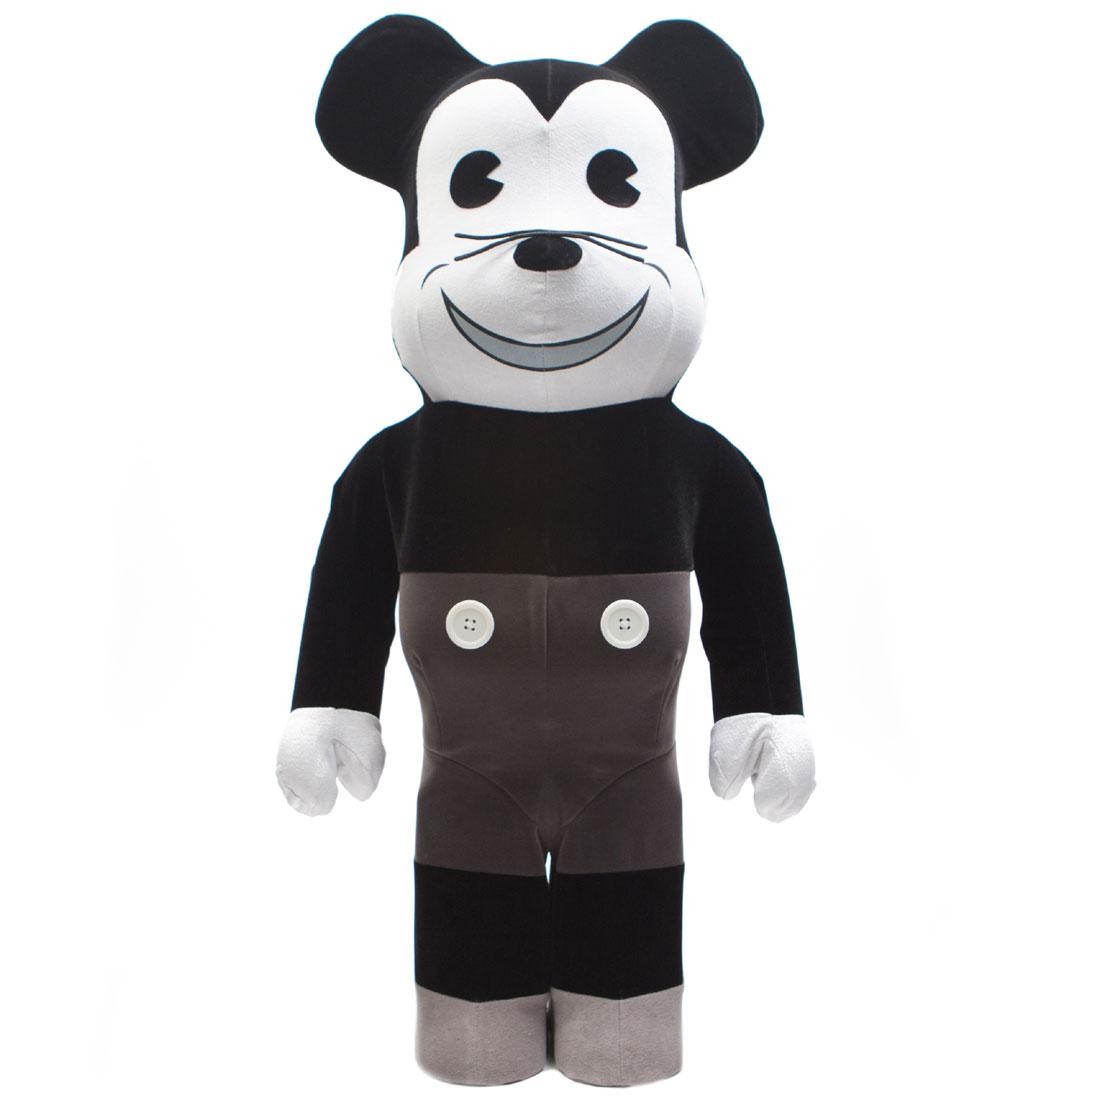 Medicom Disney Mickey Mouse Vintage B&W Ver. 1000% Bearbrick Figure (black  / white)